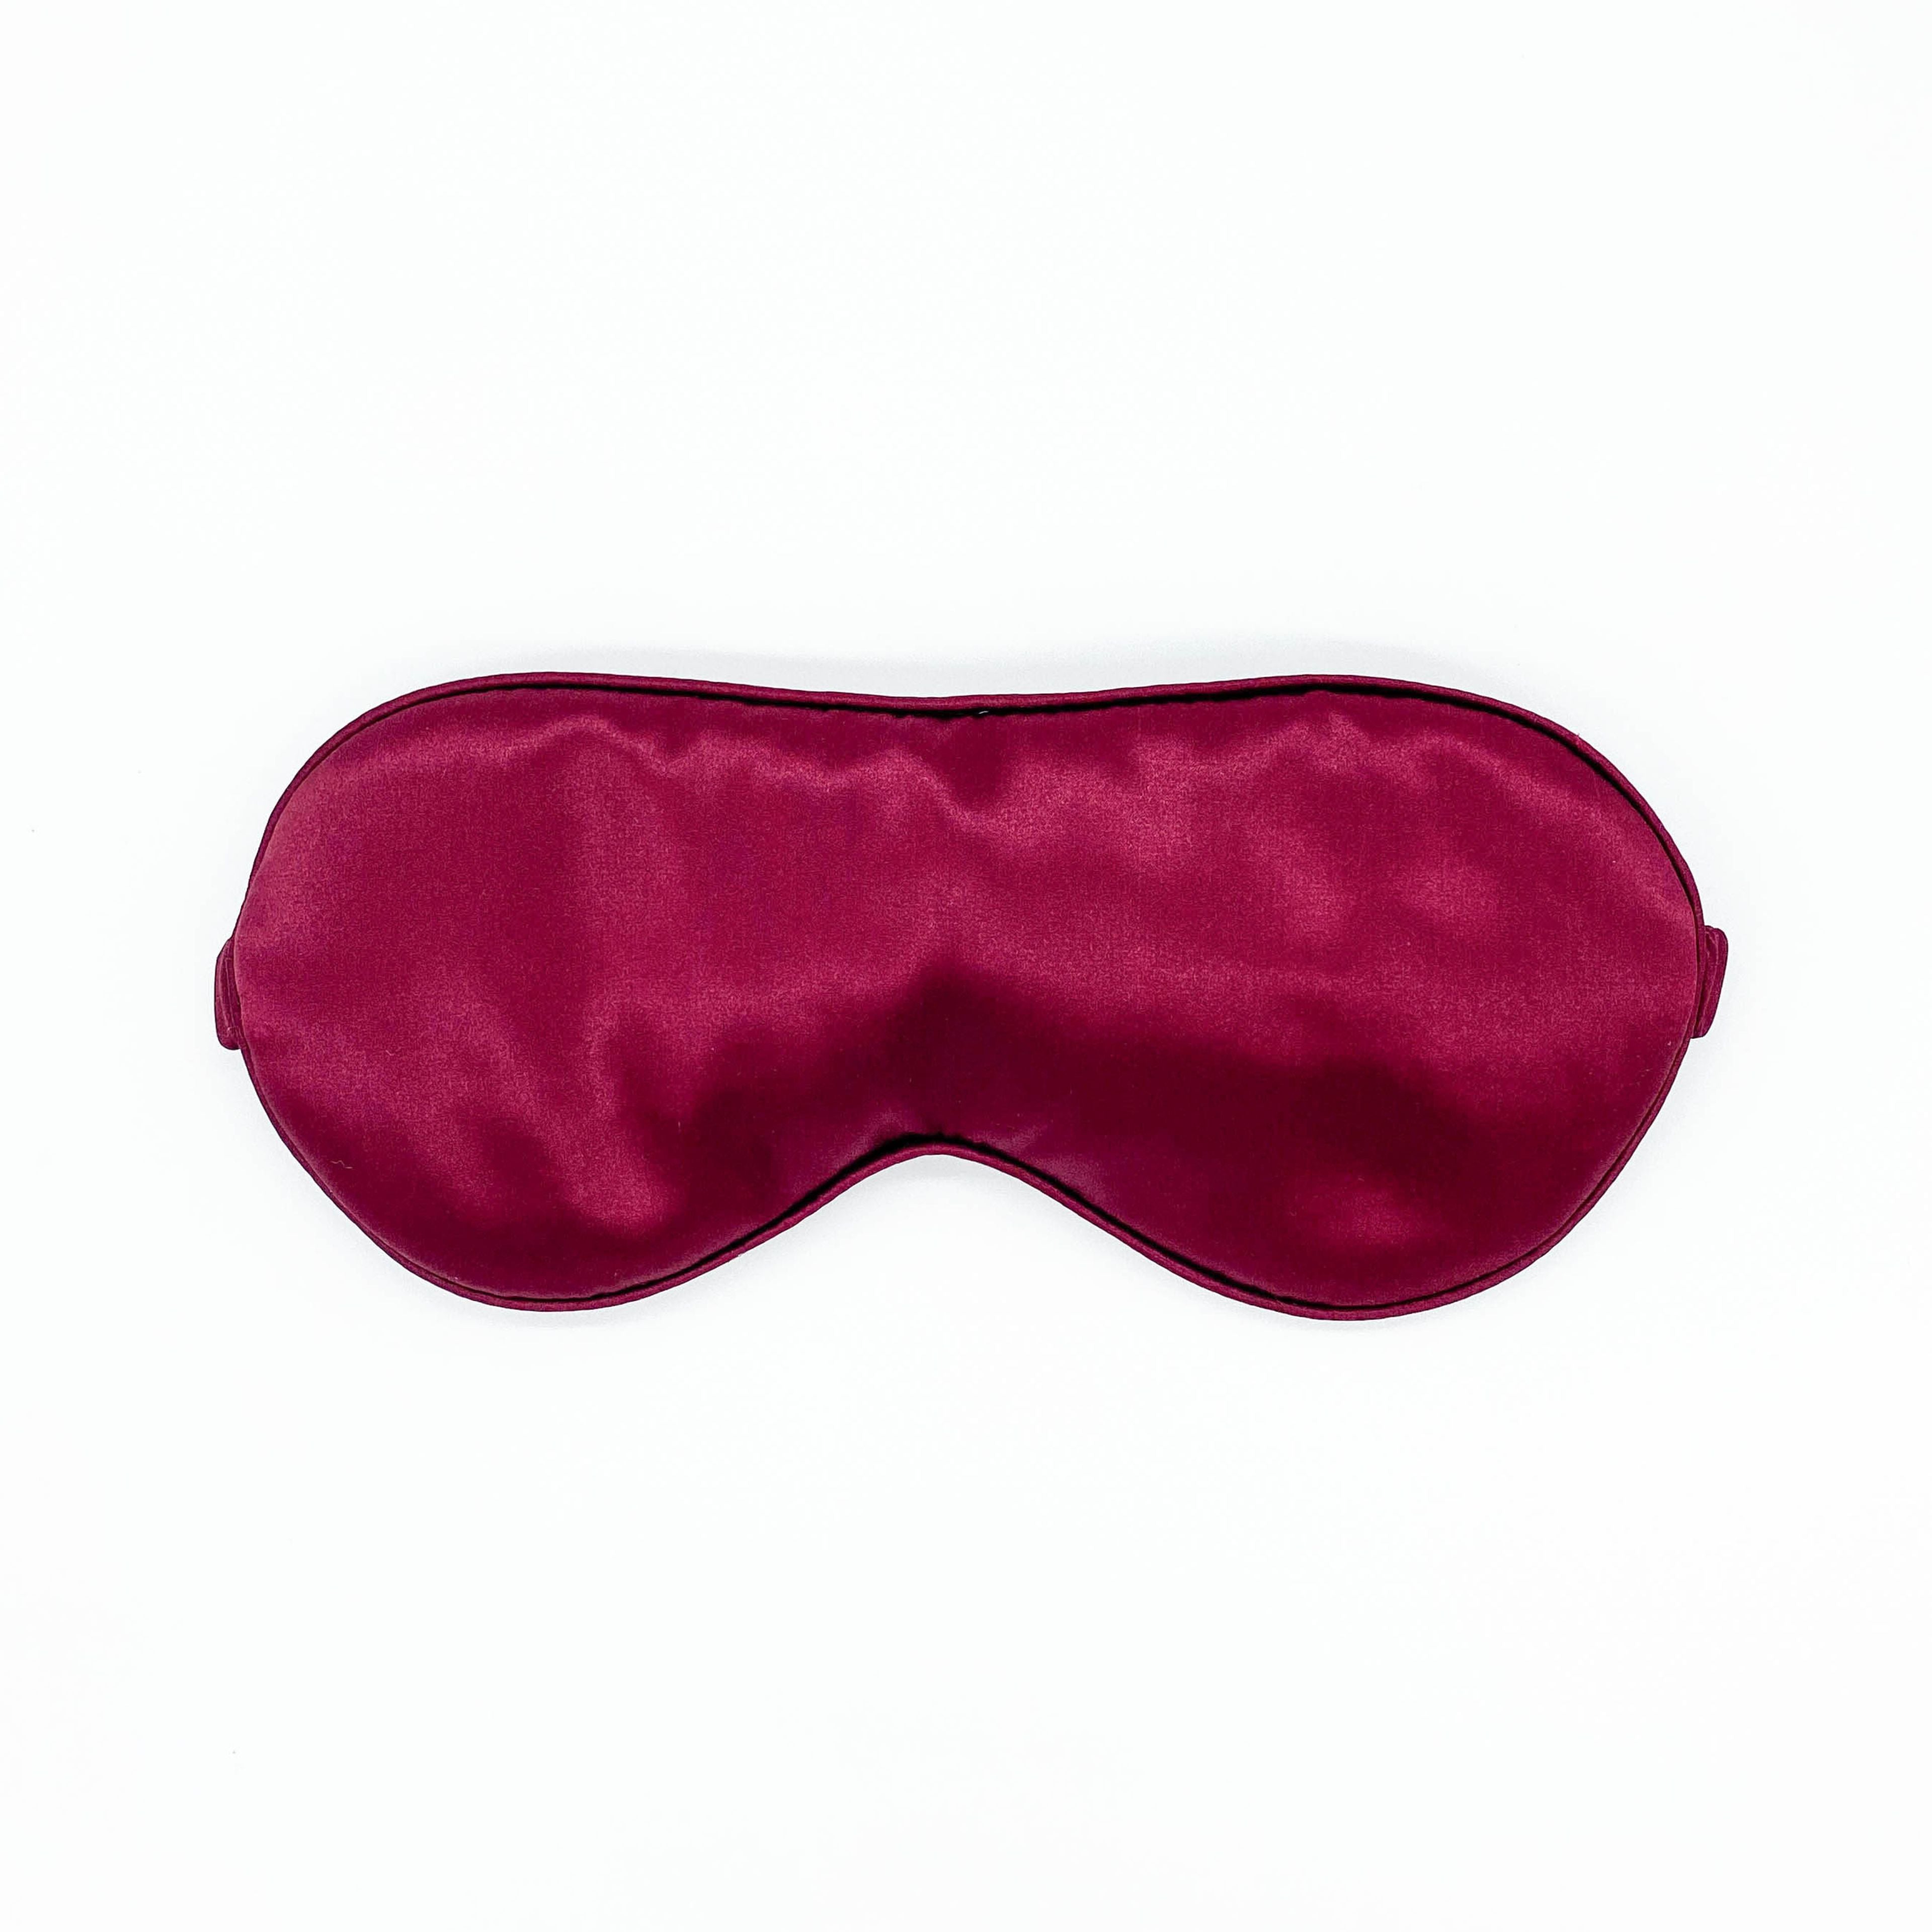 Best Sleeping Beauty Eye Mask - Silk Sleep Eye Masks on SALE Now